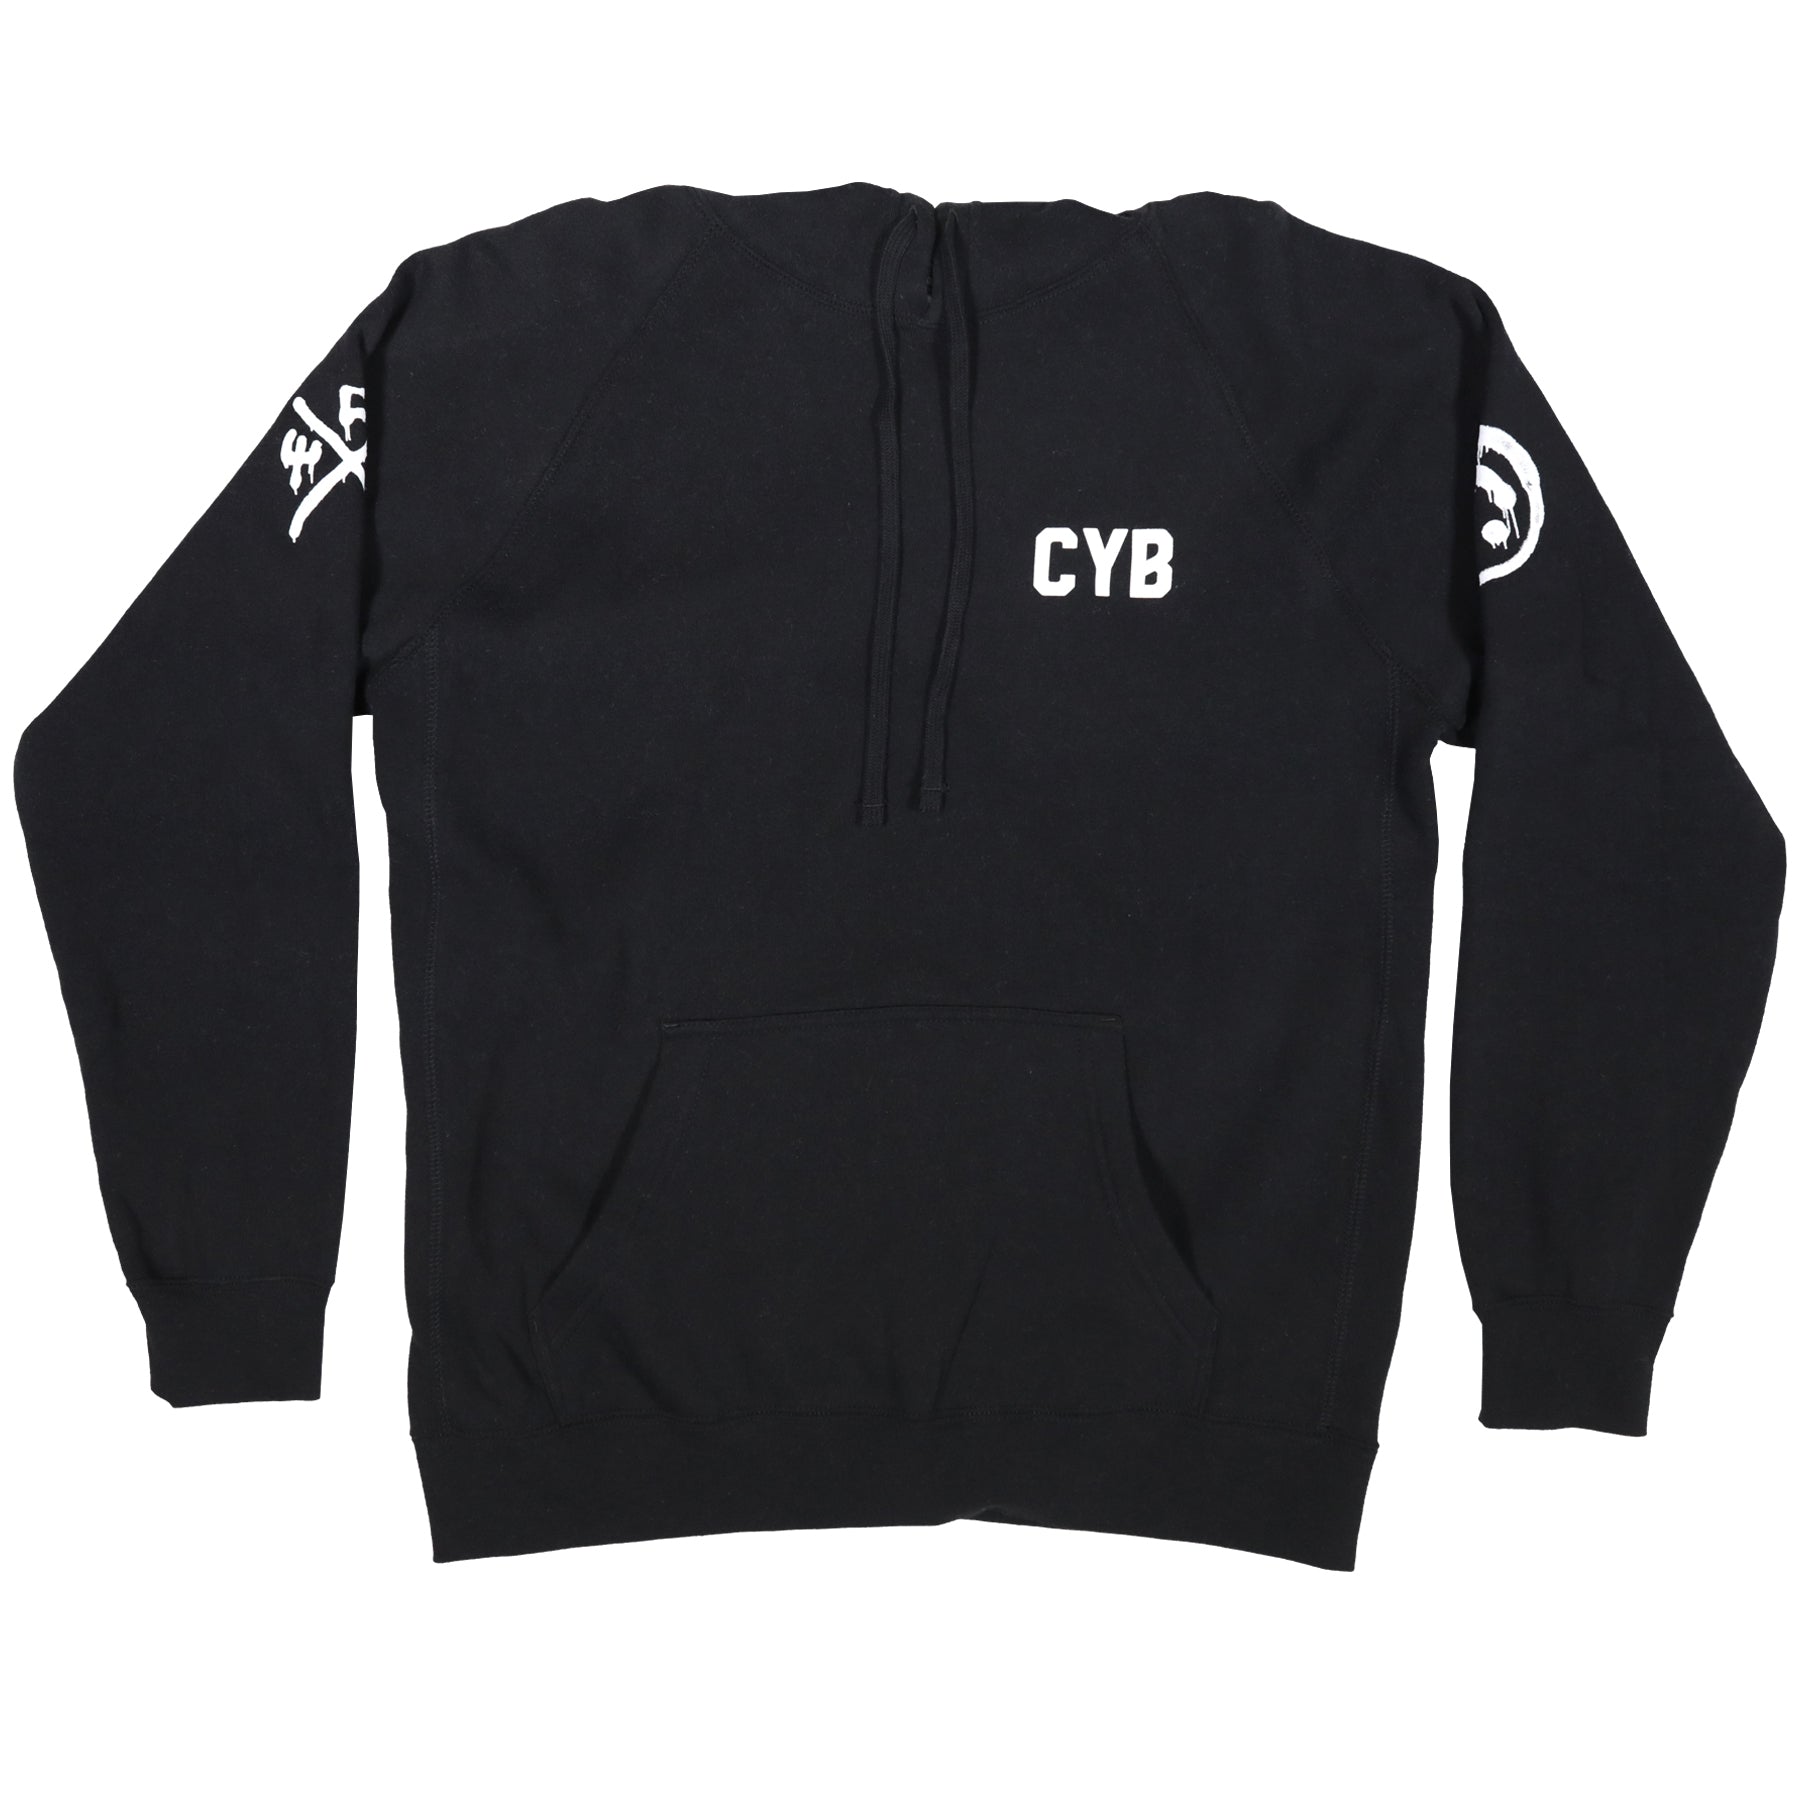 CYB HOOD - commonyouthbrand